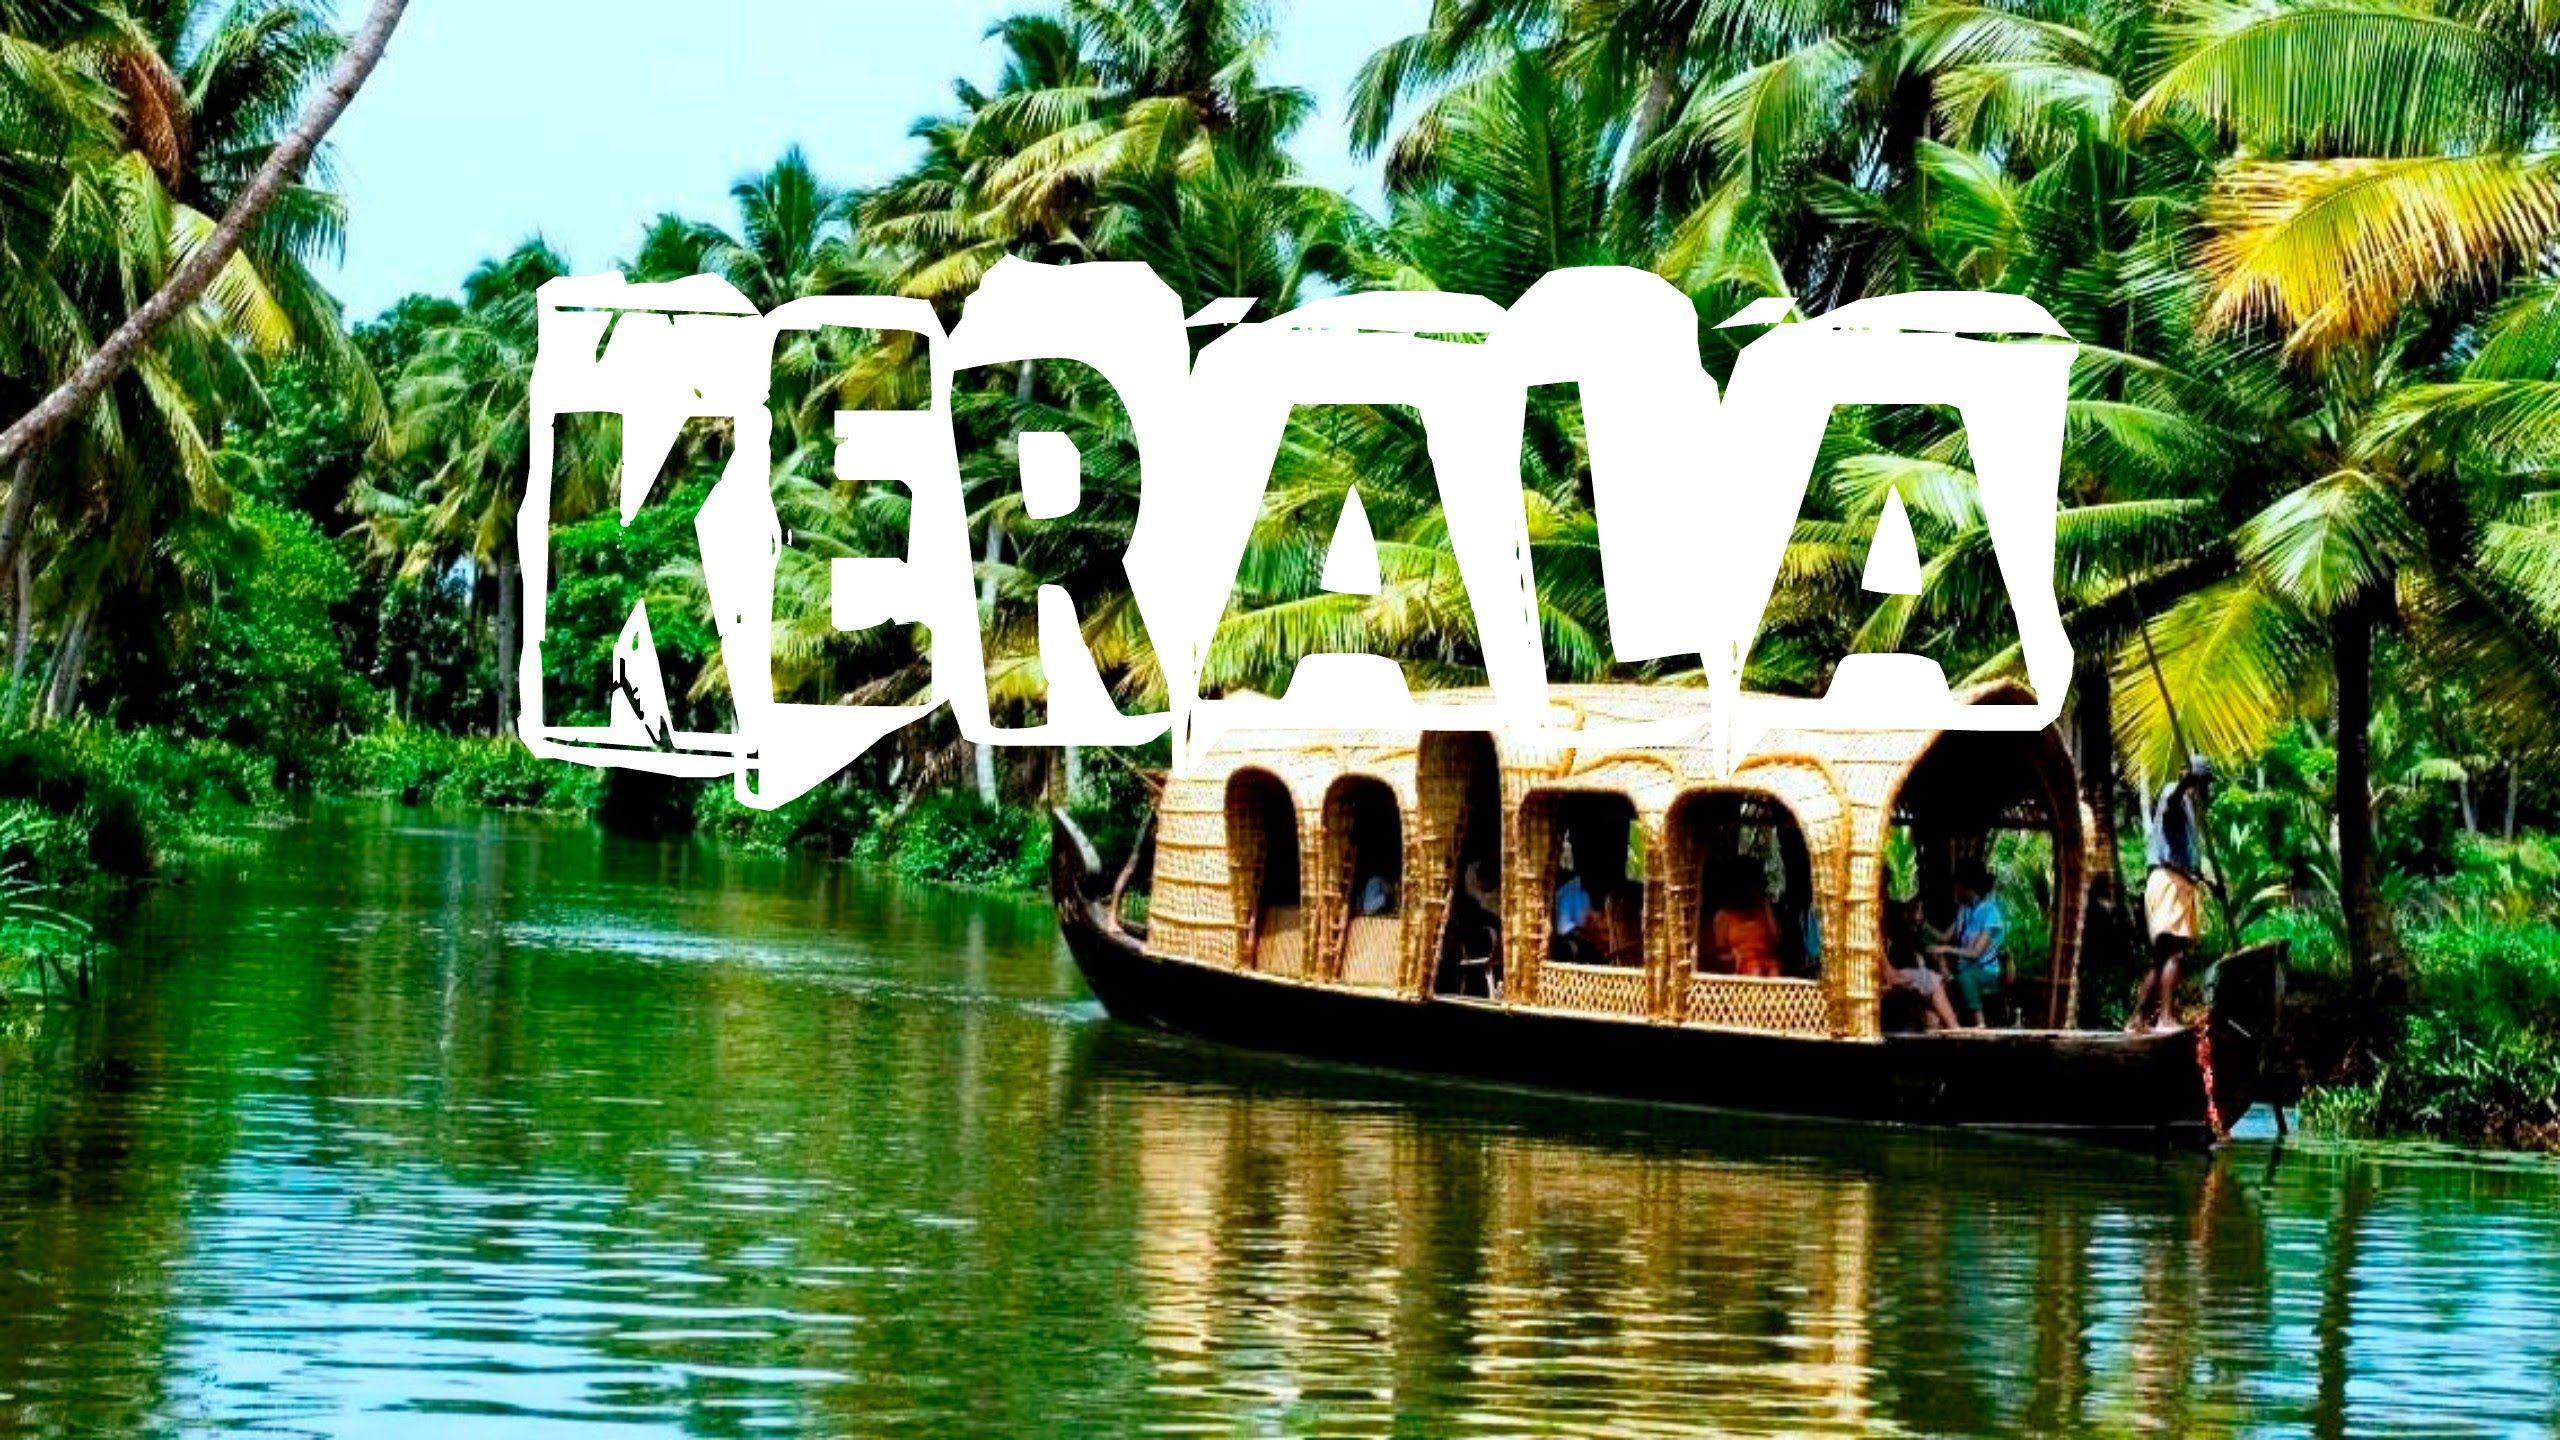 tourism about kerala